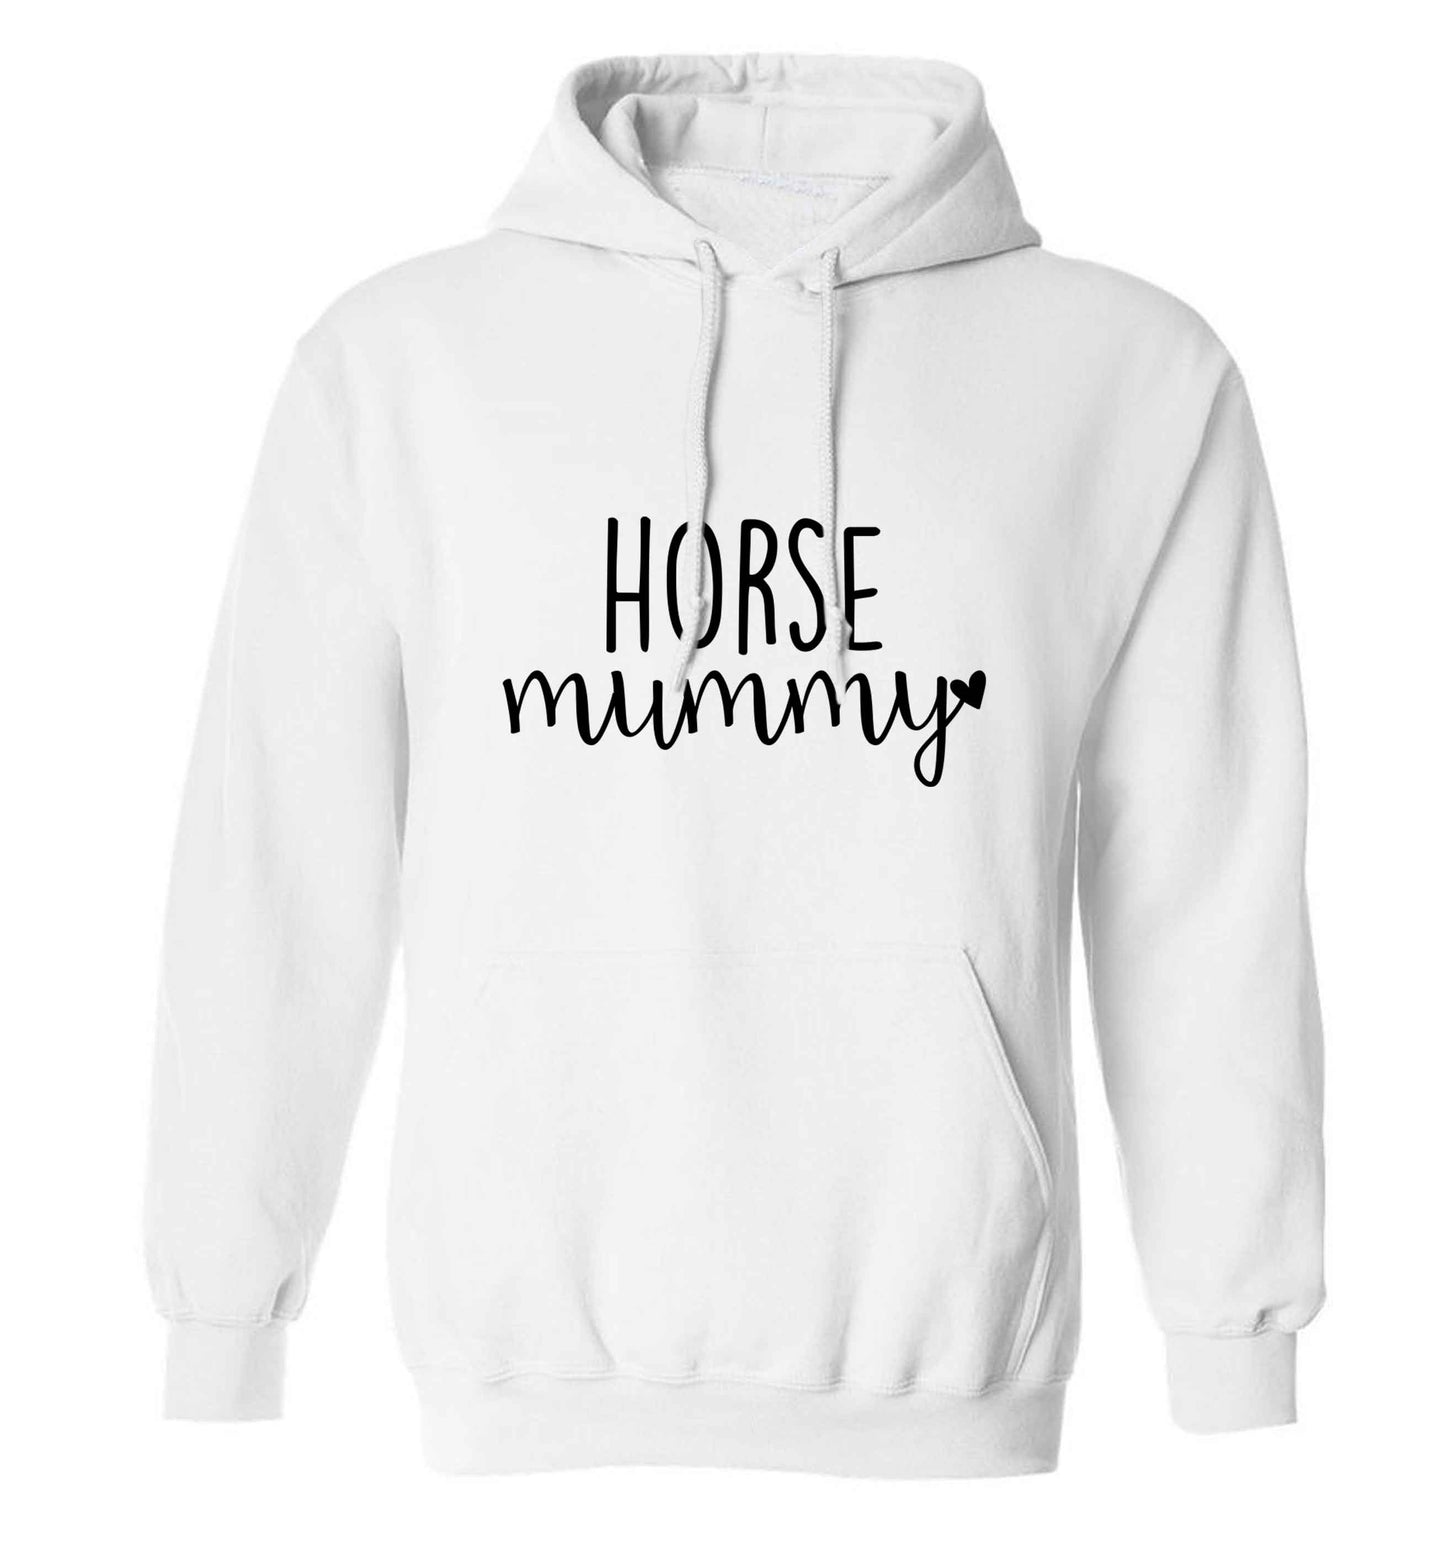 Horse mummy adults unisex white hoodie 2XL